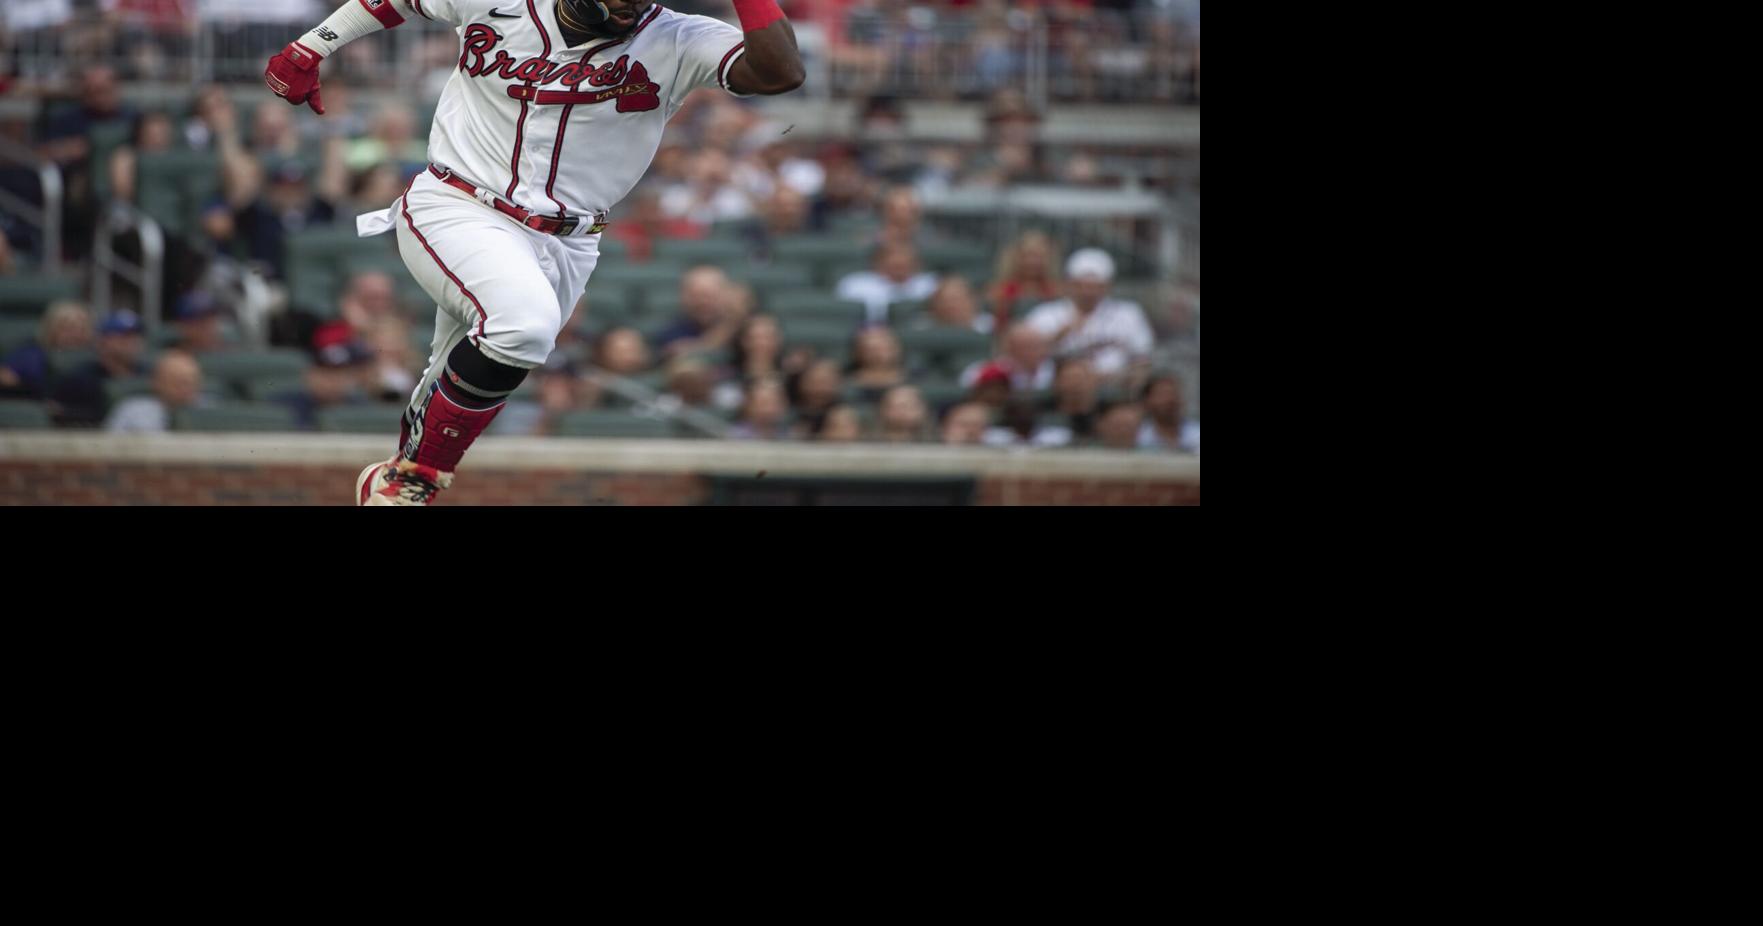 Michael Harris II offers casual bat flip after second career home run, Atlanta Braves, home run, Atlanta